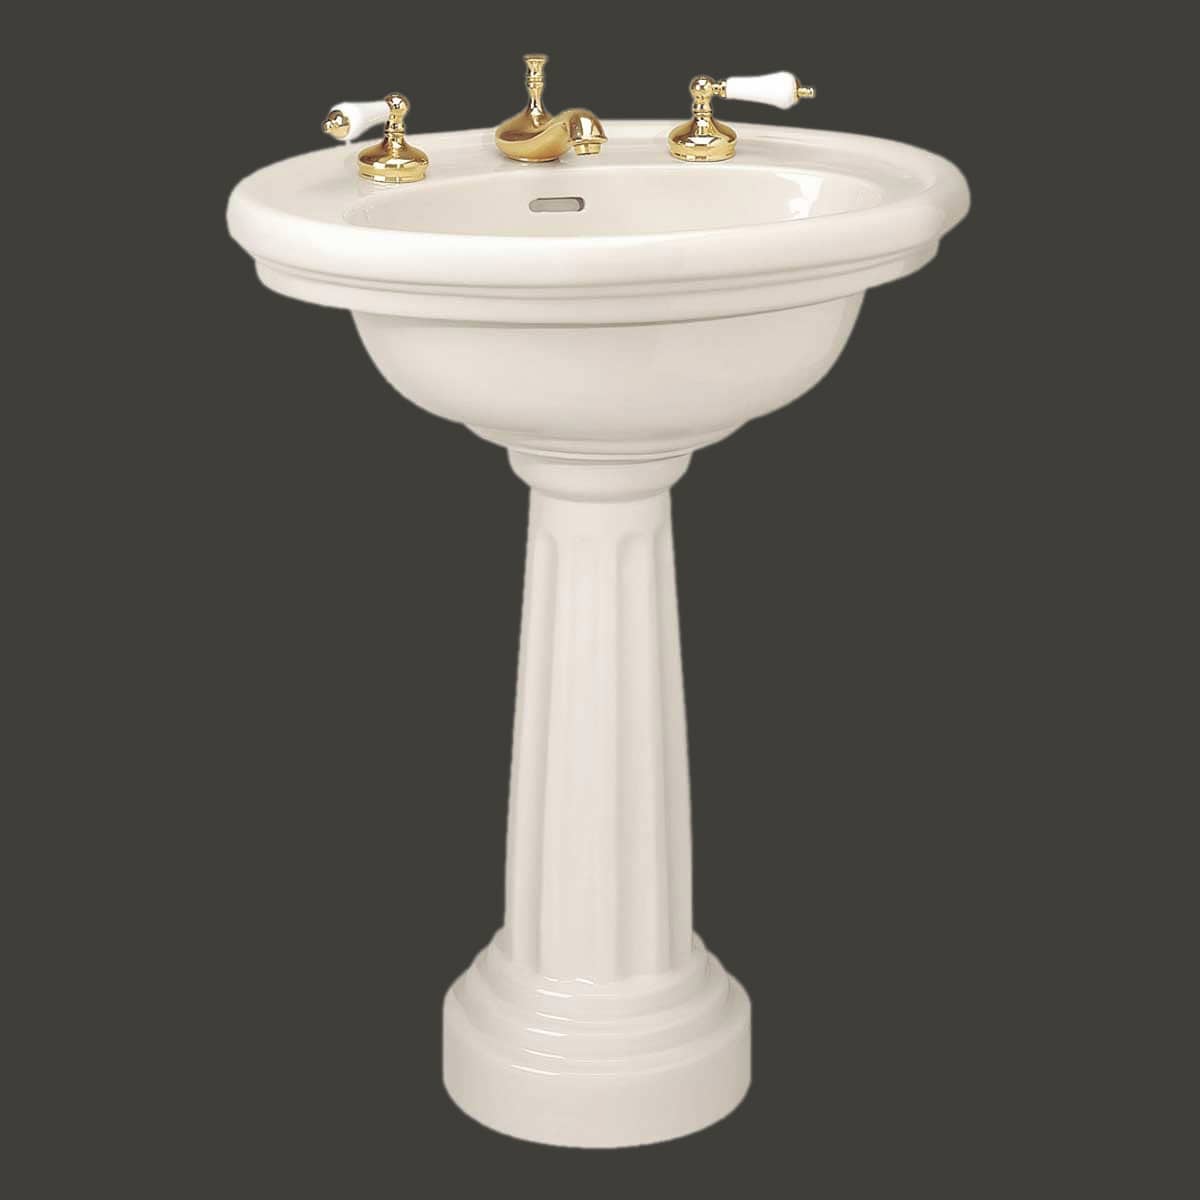 Bone China Deluxe Philadelphia Bathroom Pedestal Sink Renovator S Supply